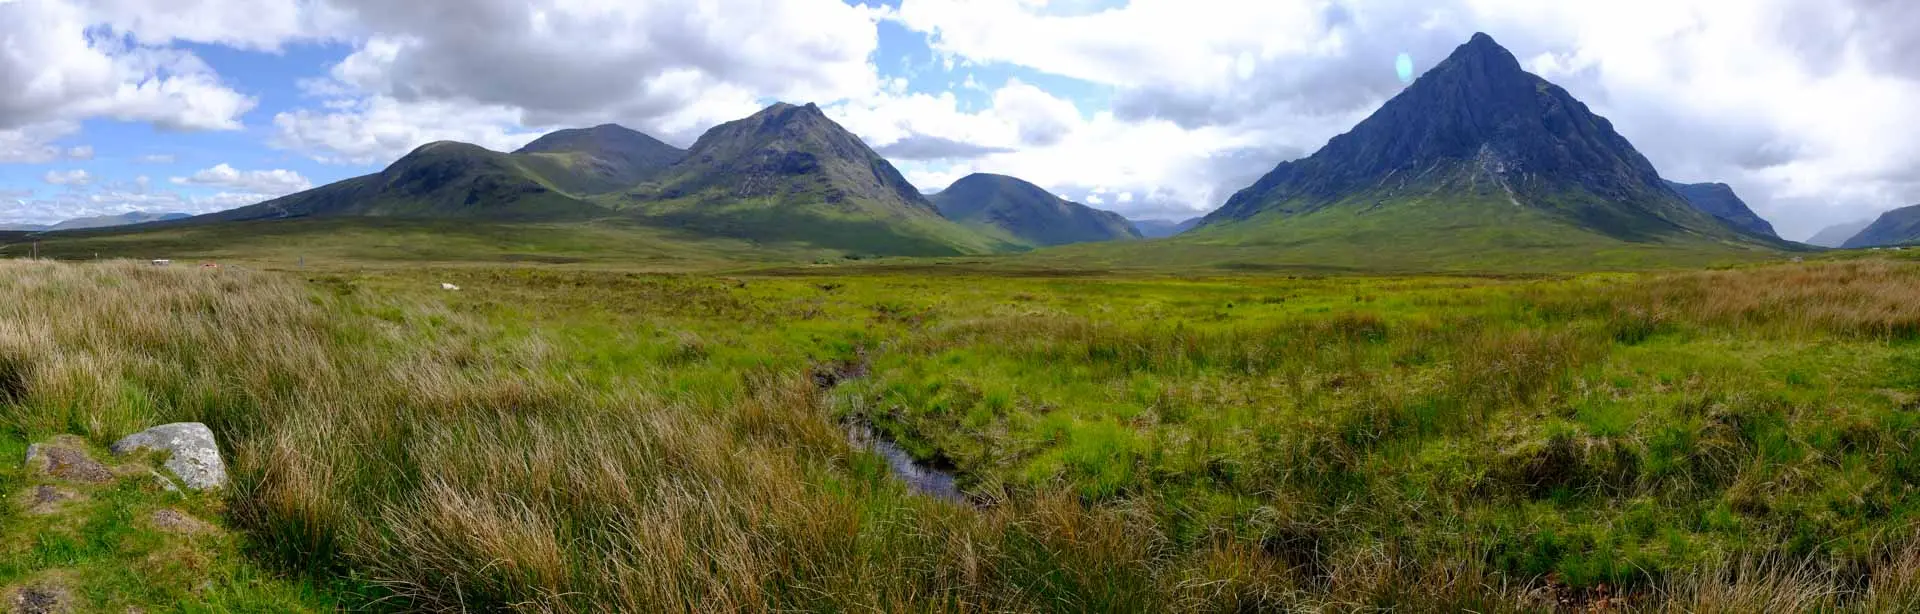 Adéntrate al corazón de la naturaleza, leyendas e historia de Escocia. Únete a este viaje a Escocia en grupo en el que, desde Edimburgo, recorrer la isla.